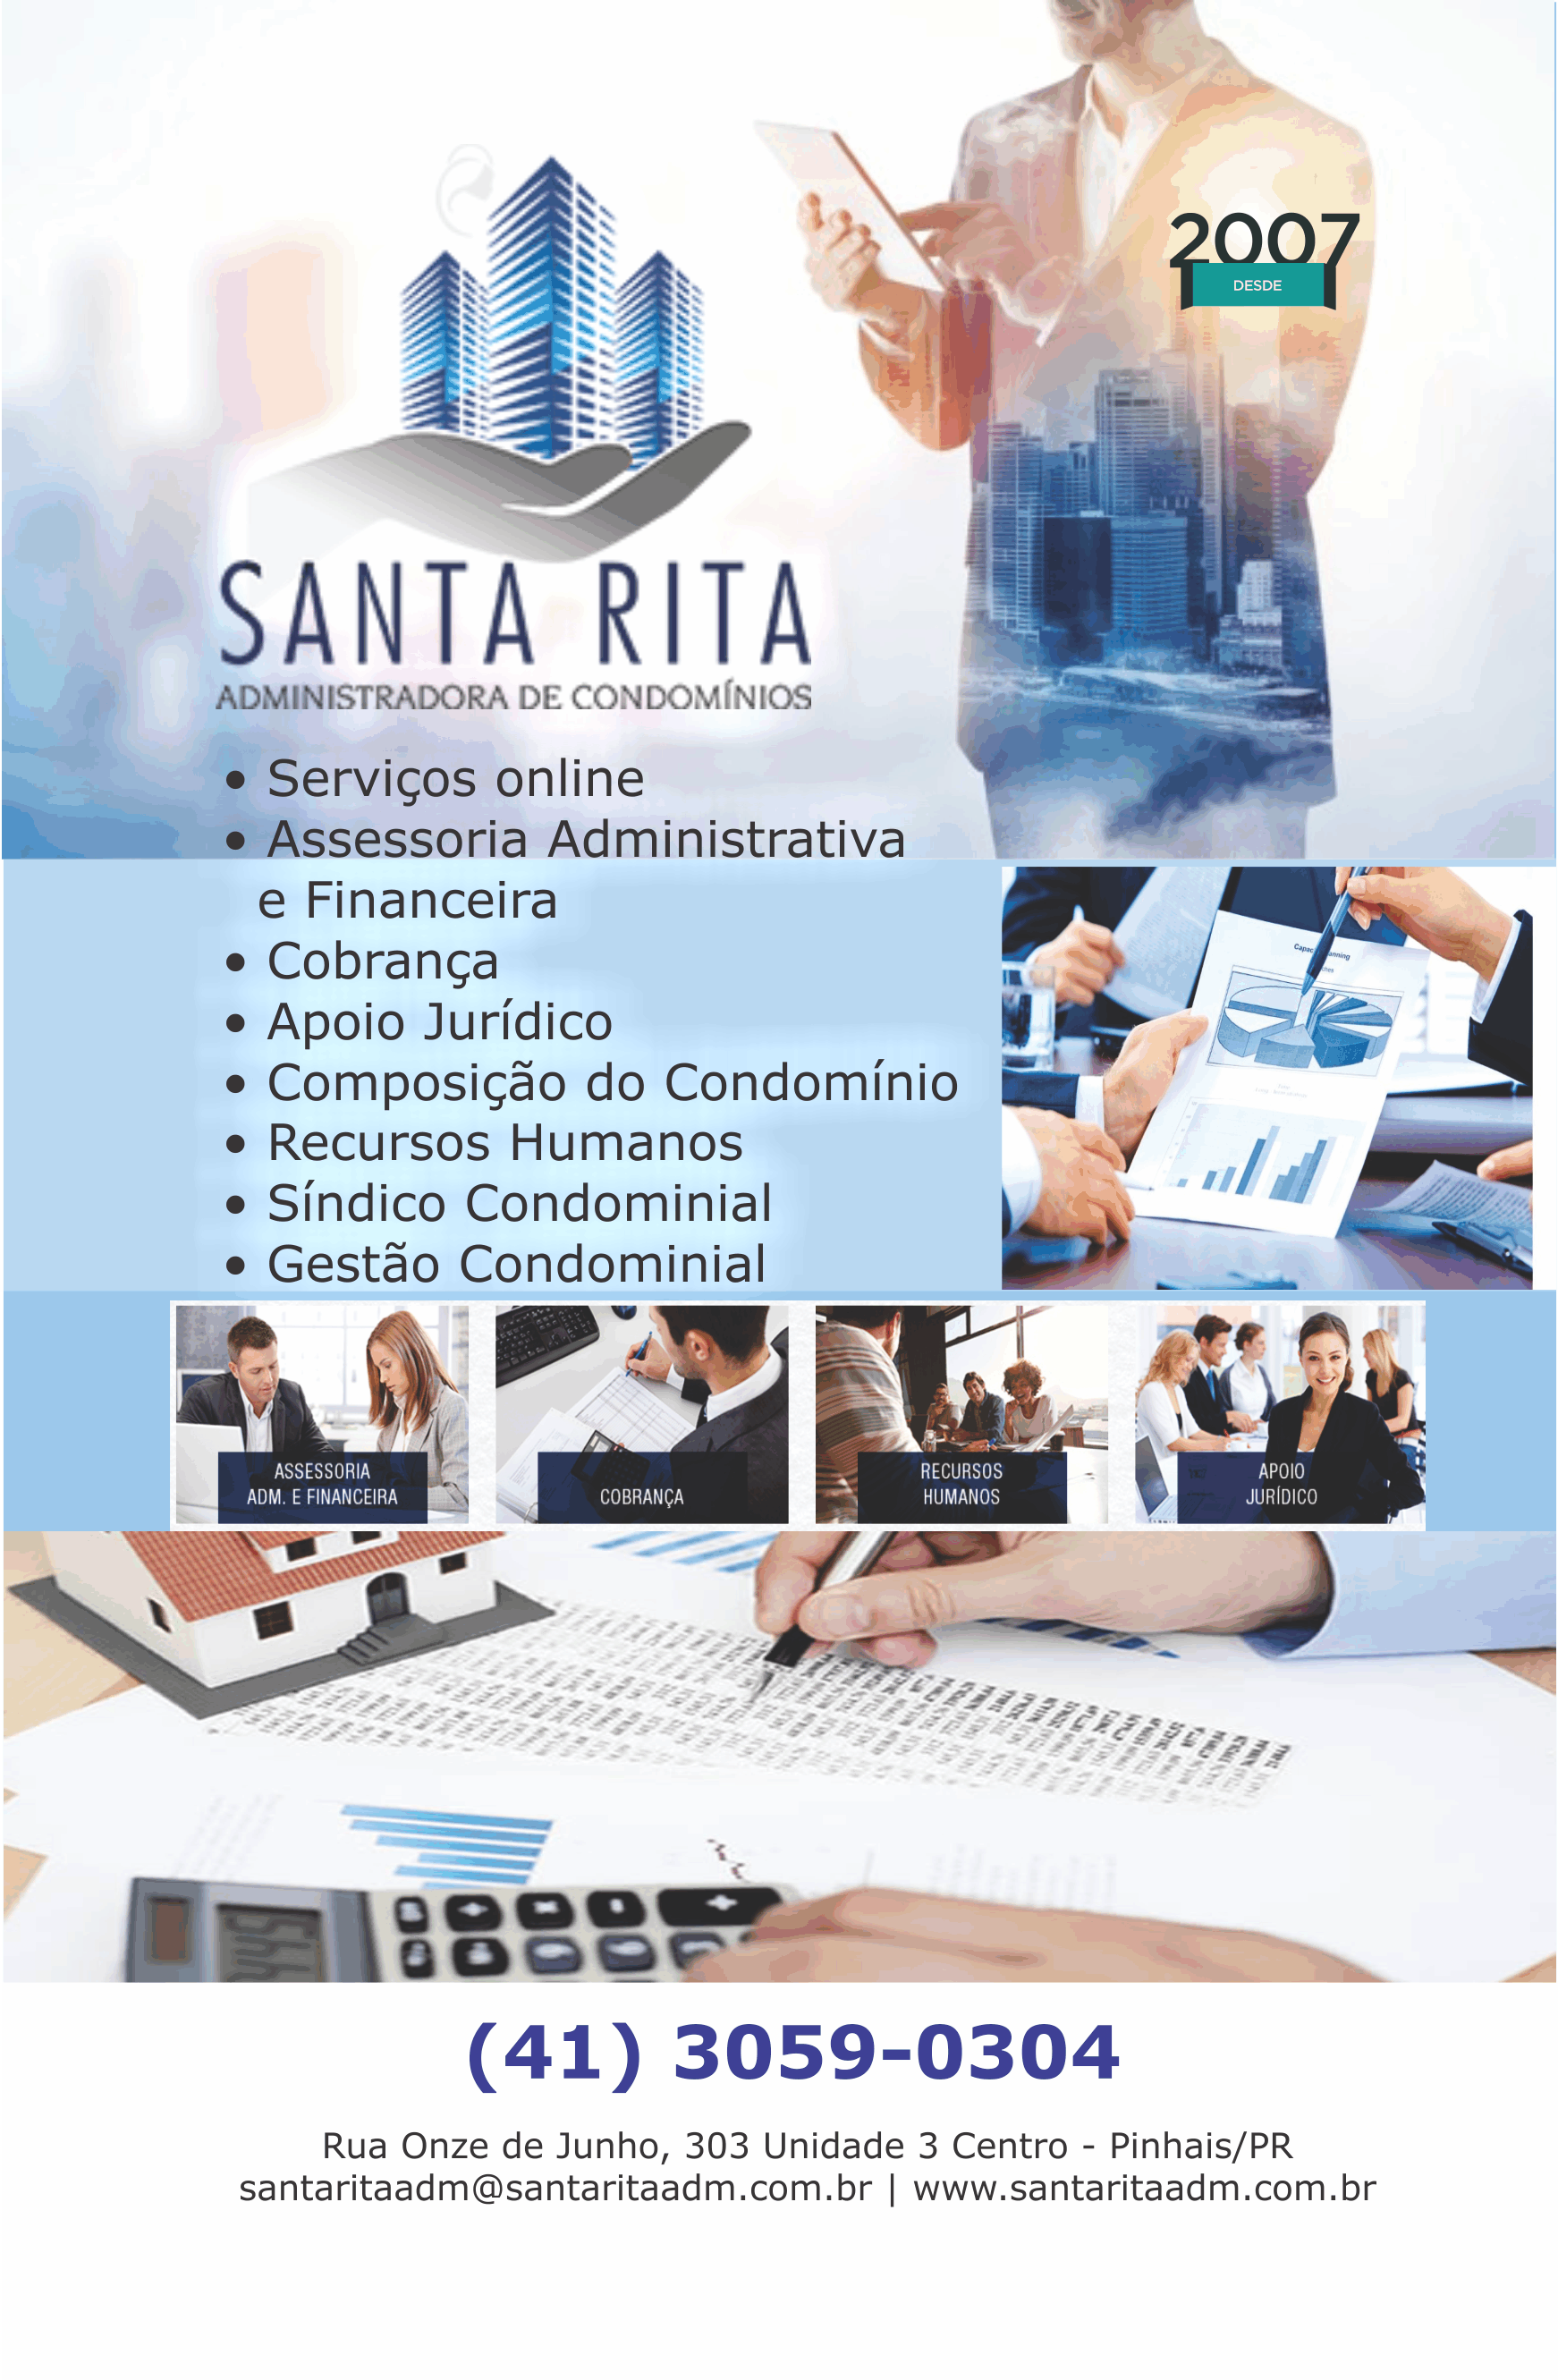 Santa Rita Administradora de Condomínios      RUA ONZE DE JUNHO, 303, PINHAIS - PR  Fones: (41) 3059-0304 /